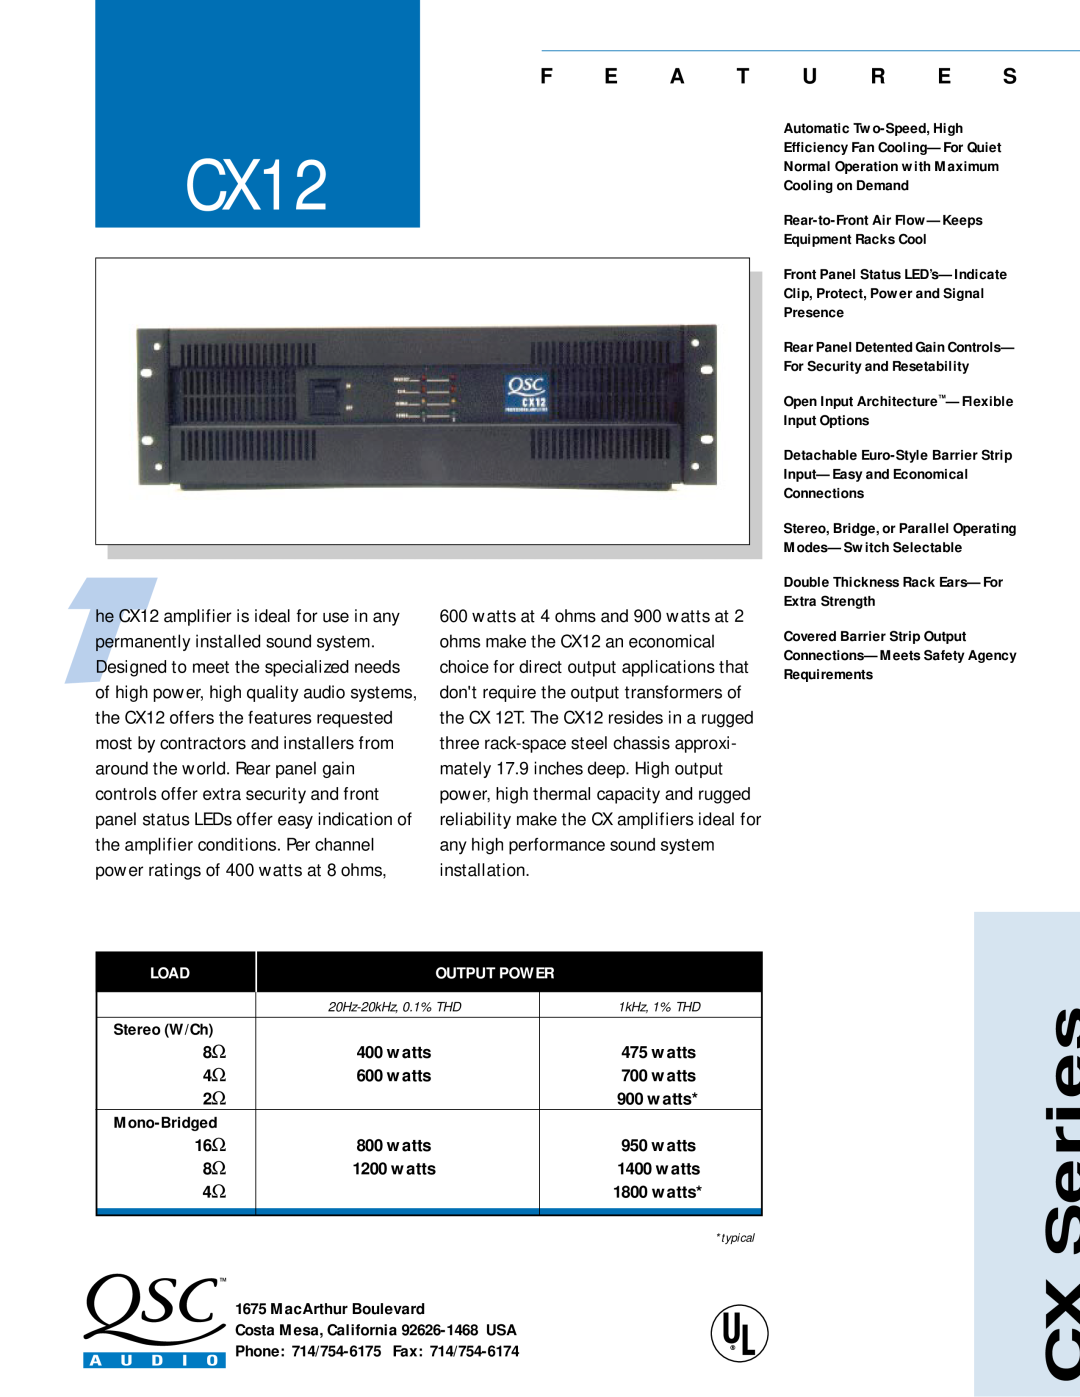 QSC Audio CX12 manual CX Series, F E A T, U R E S, Load, Output Power, Stereo W/Ch, watts, Mono-Bridged 